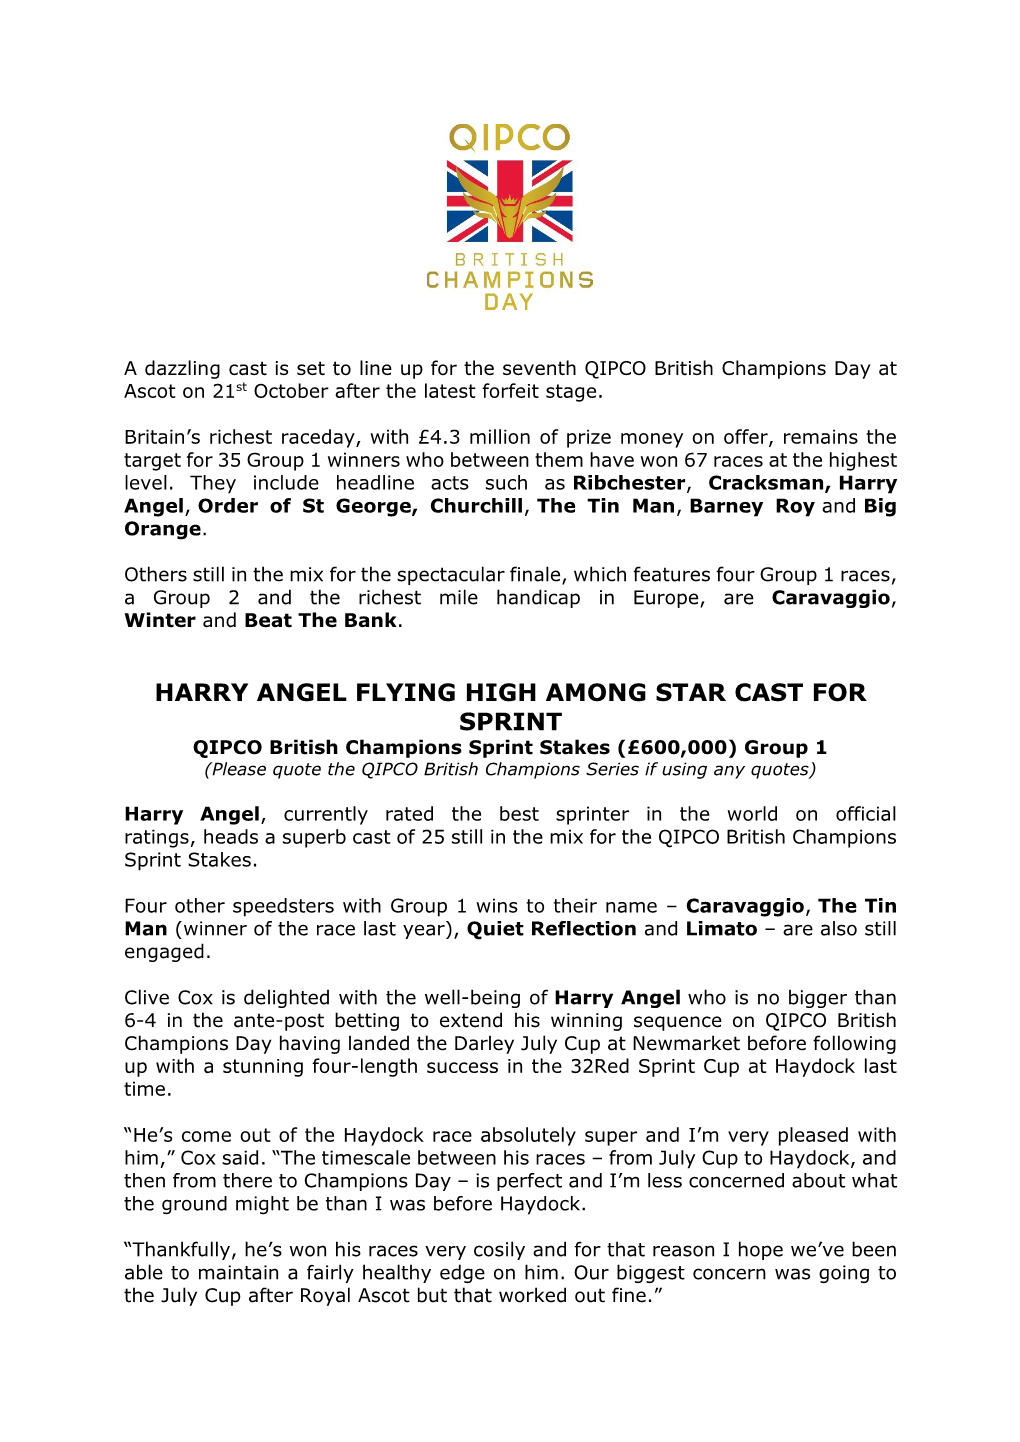 Harry Angel Flying High Among Star Cast for Sprint